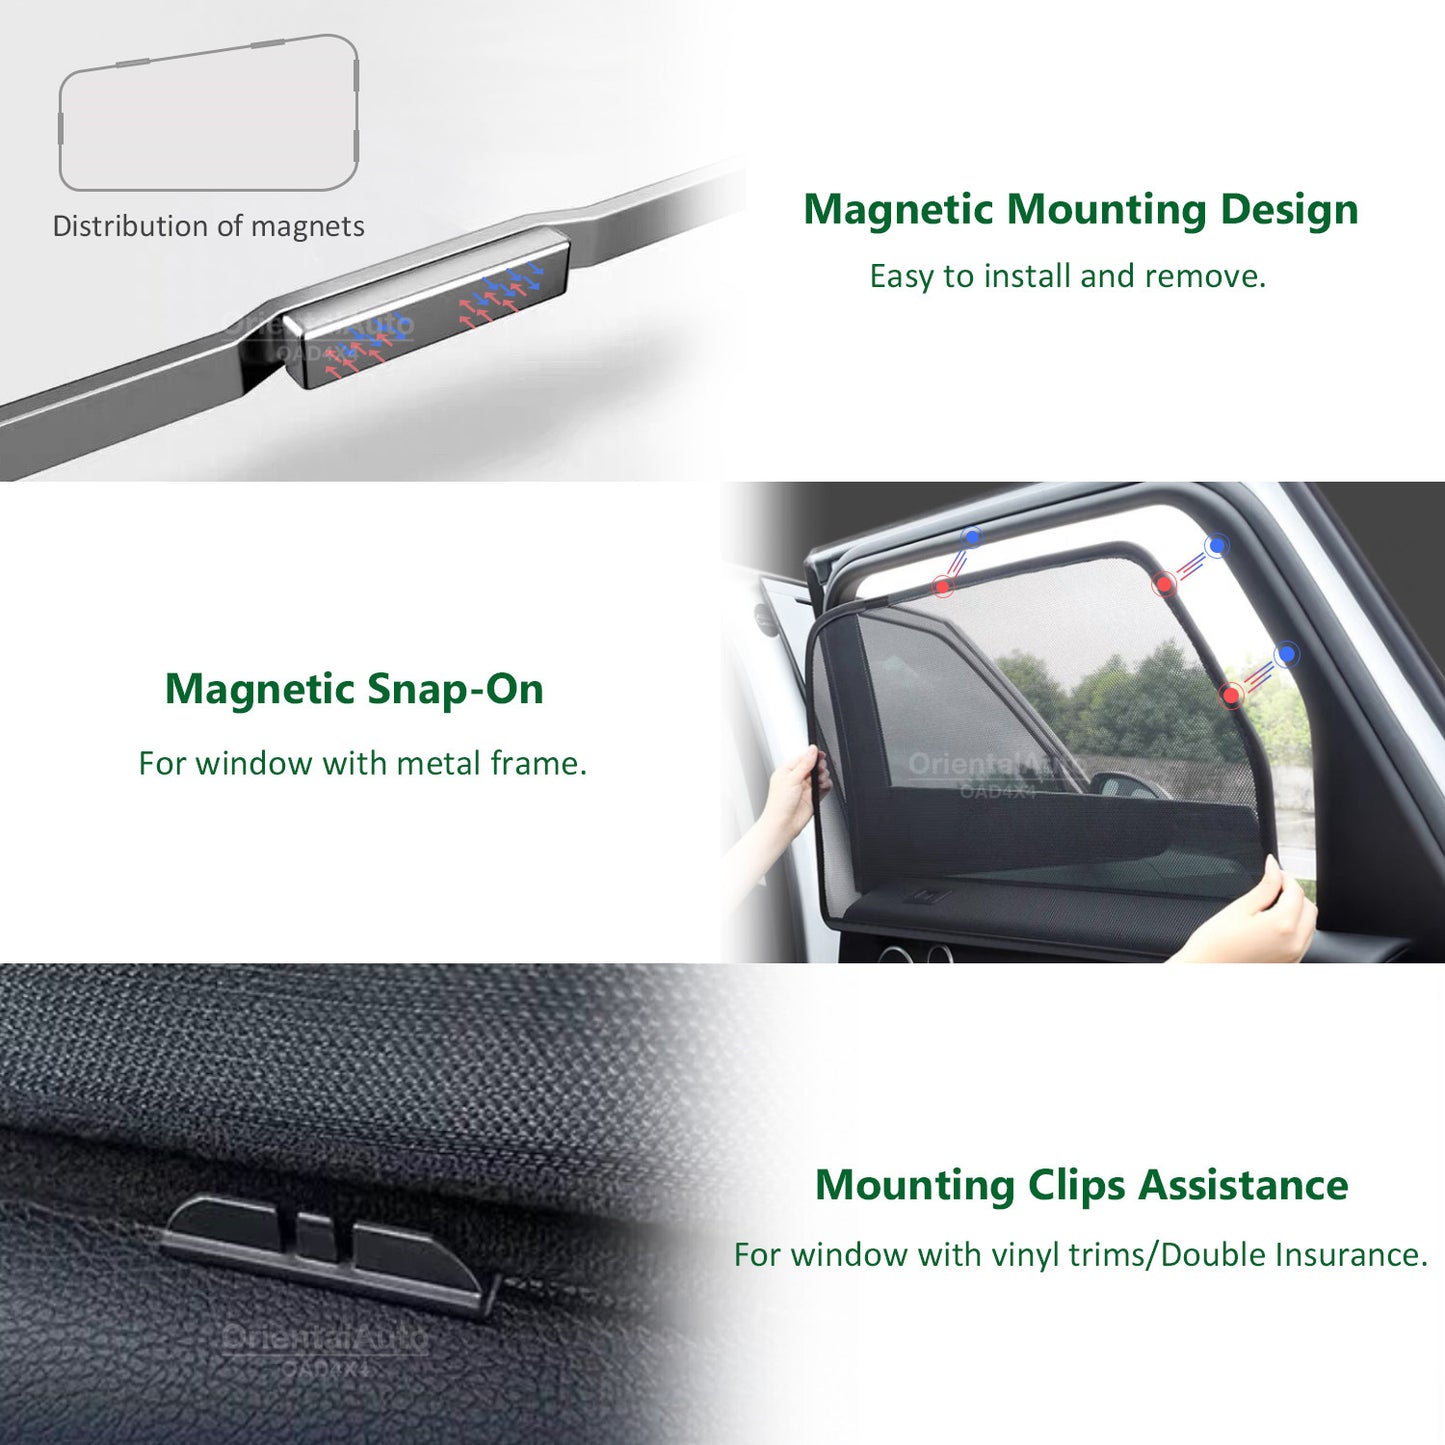 6PCS Magnetic Sun Shade for Honda Odyssey 2013-2020 Window Sun Shades UV Protection Mesh Cover